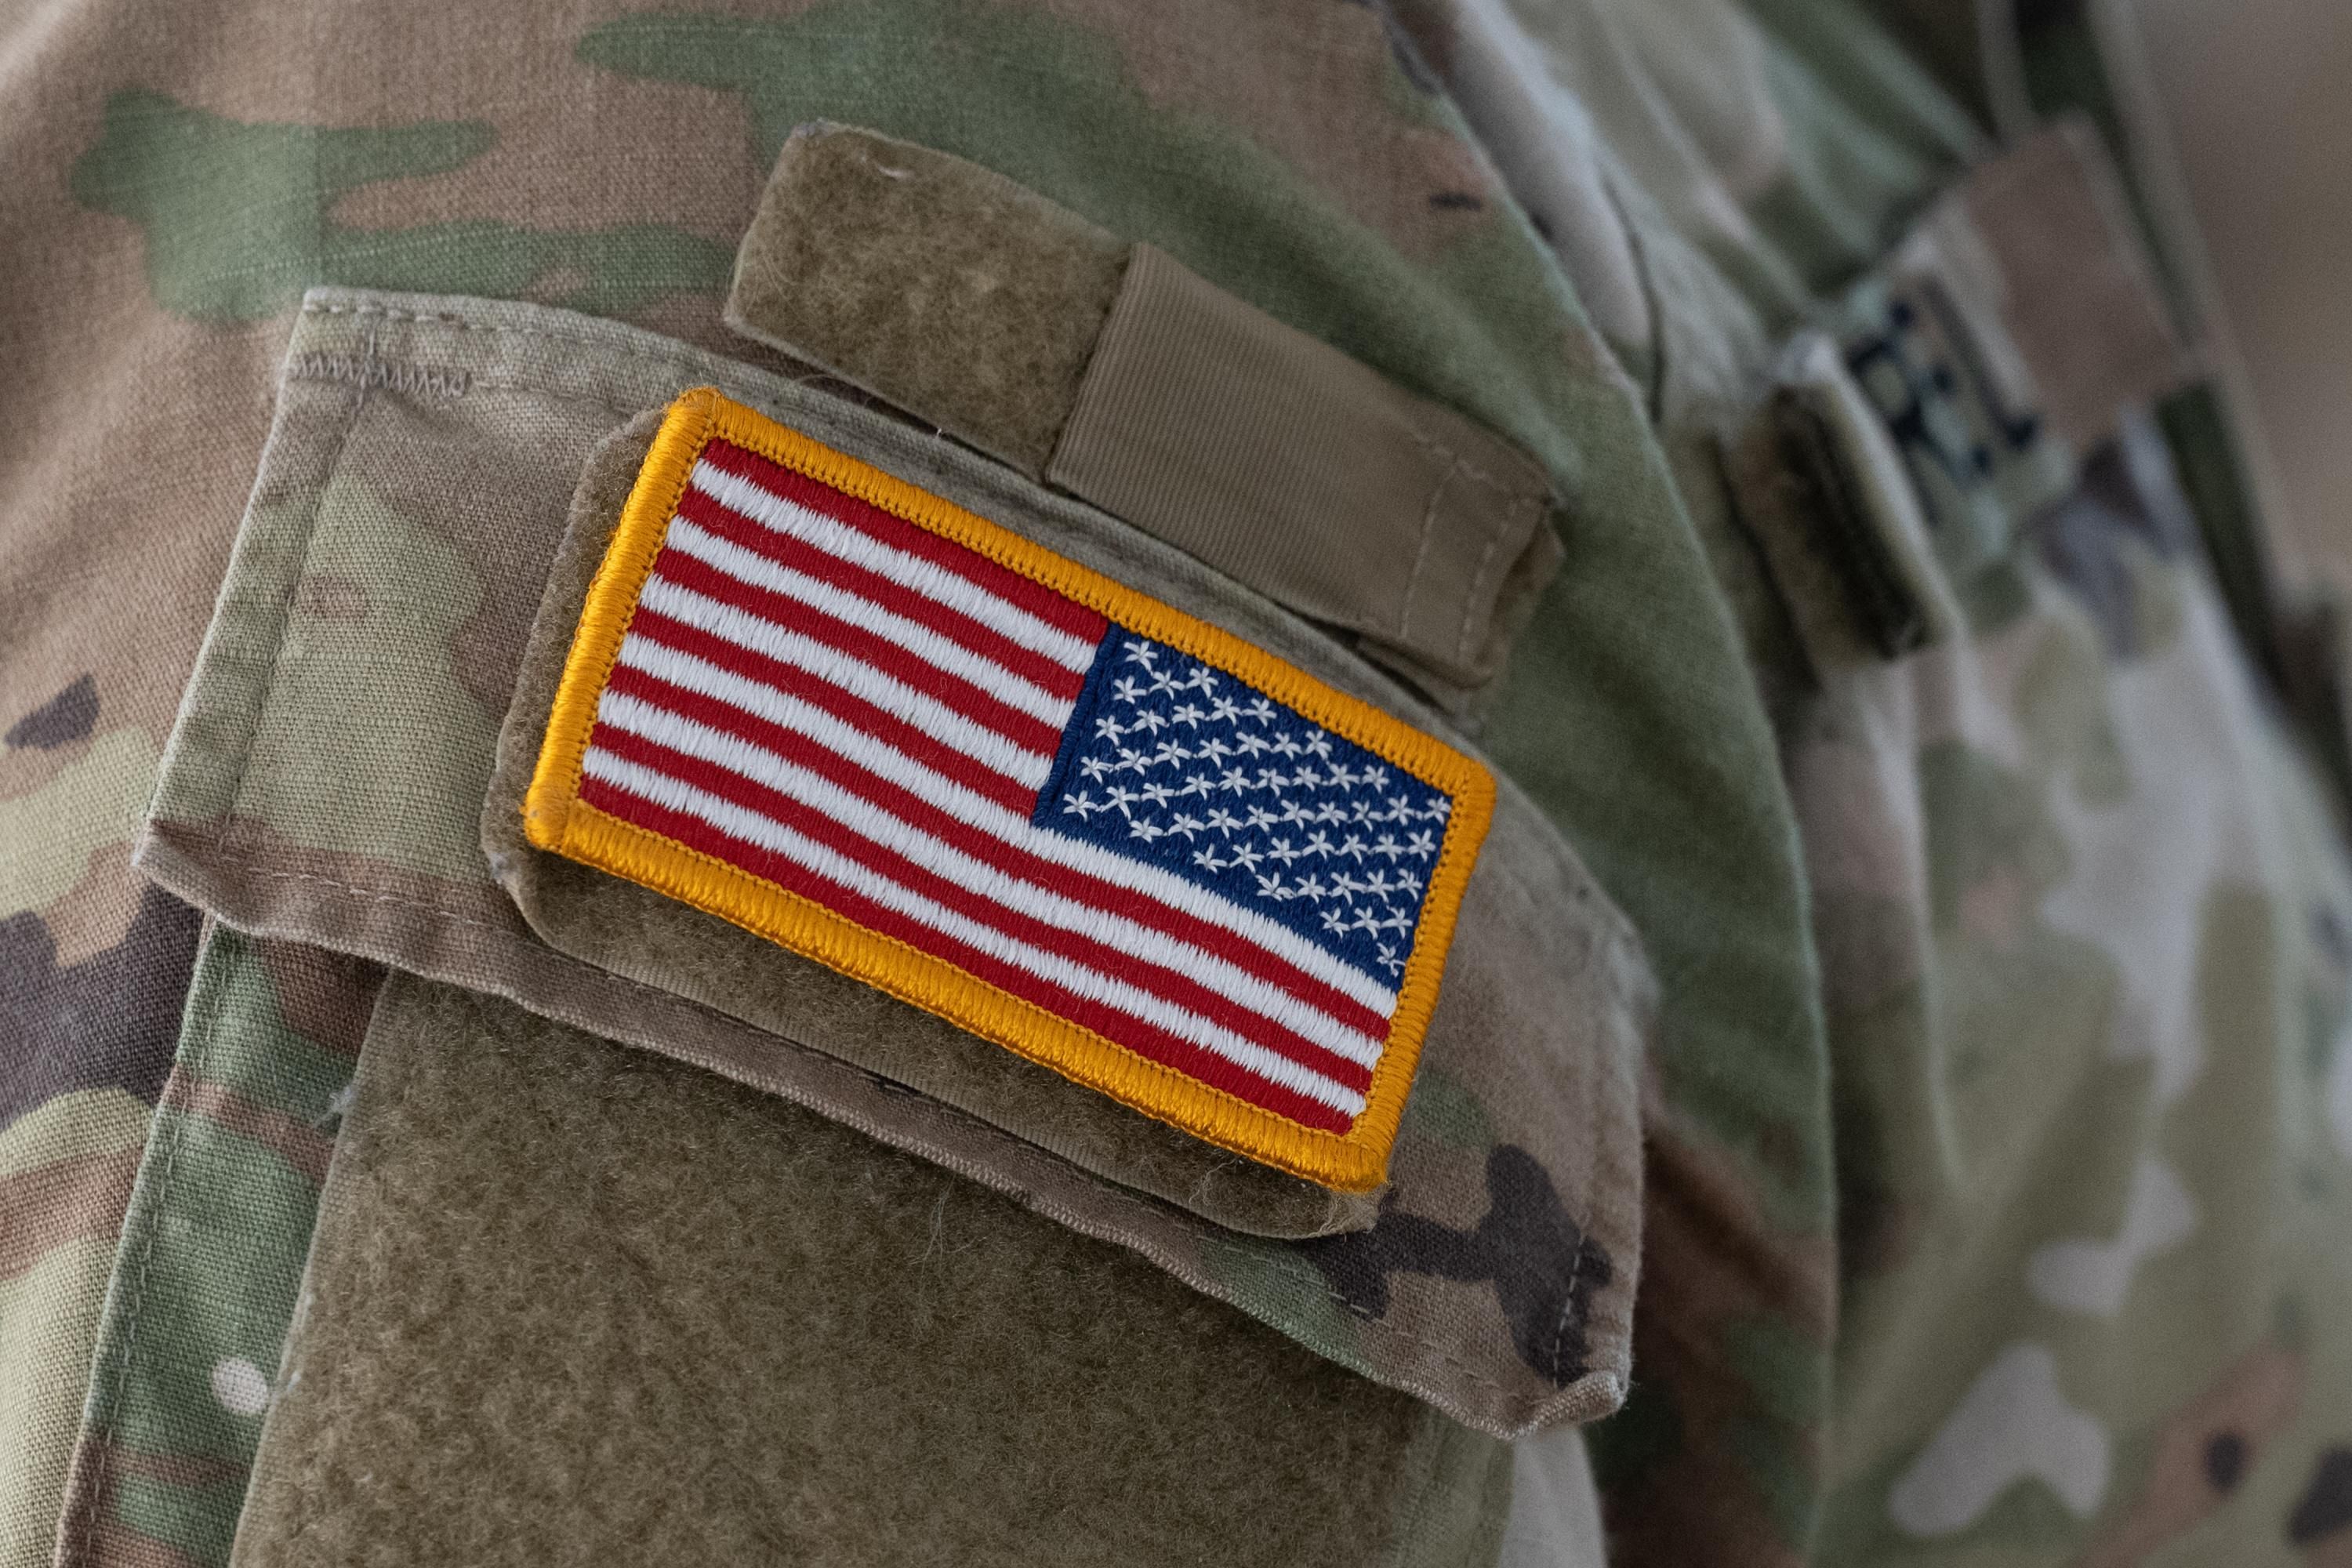 US_war_flag_GettyImages